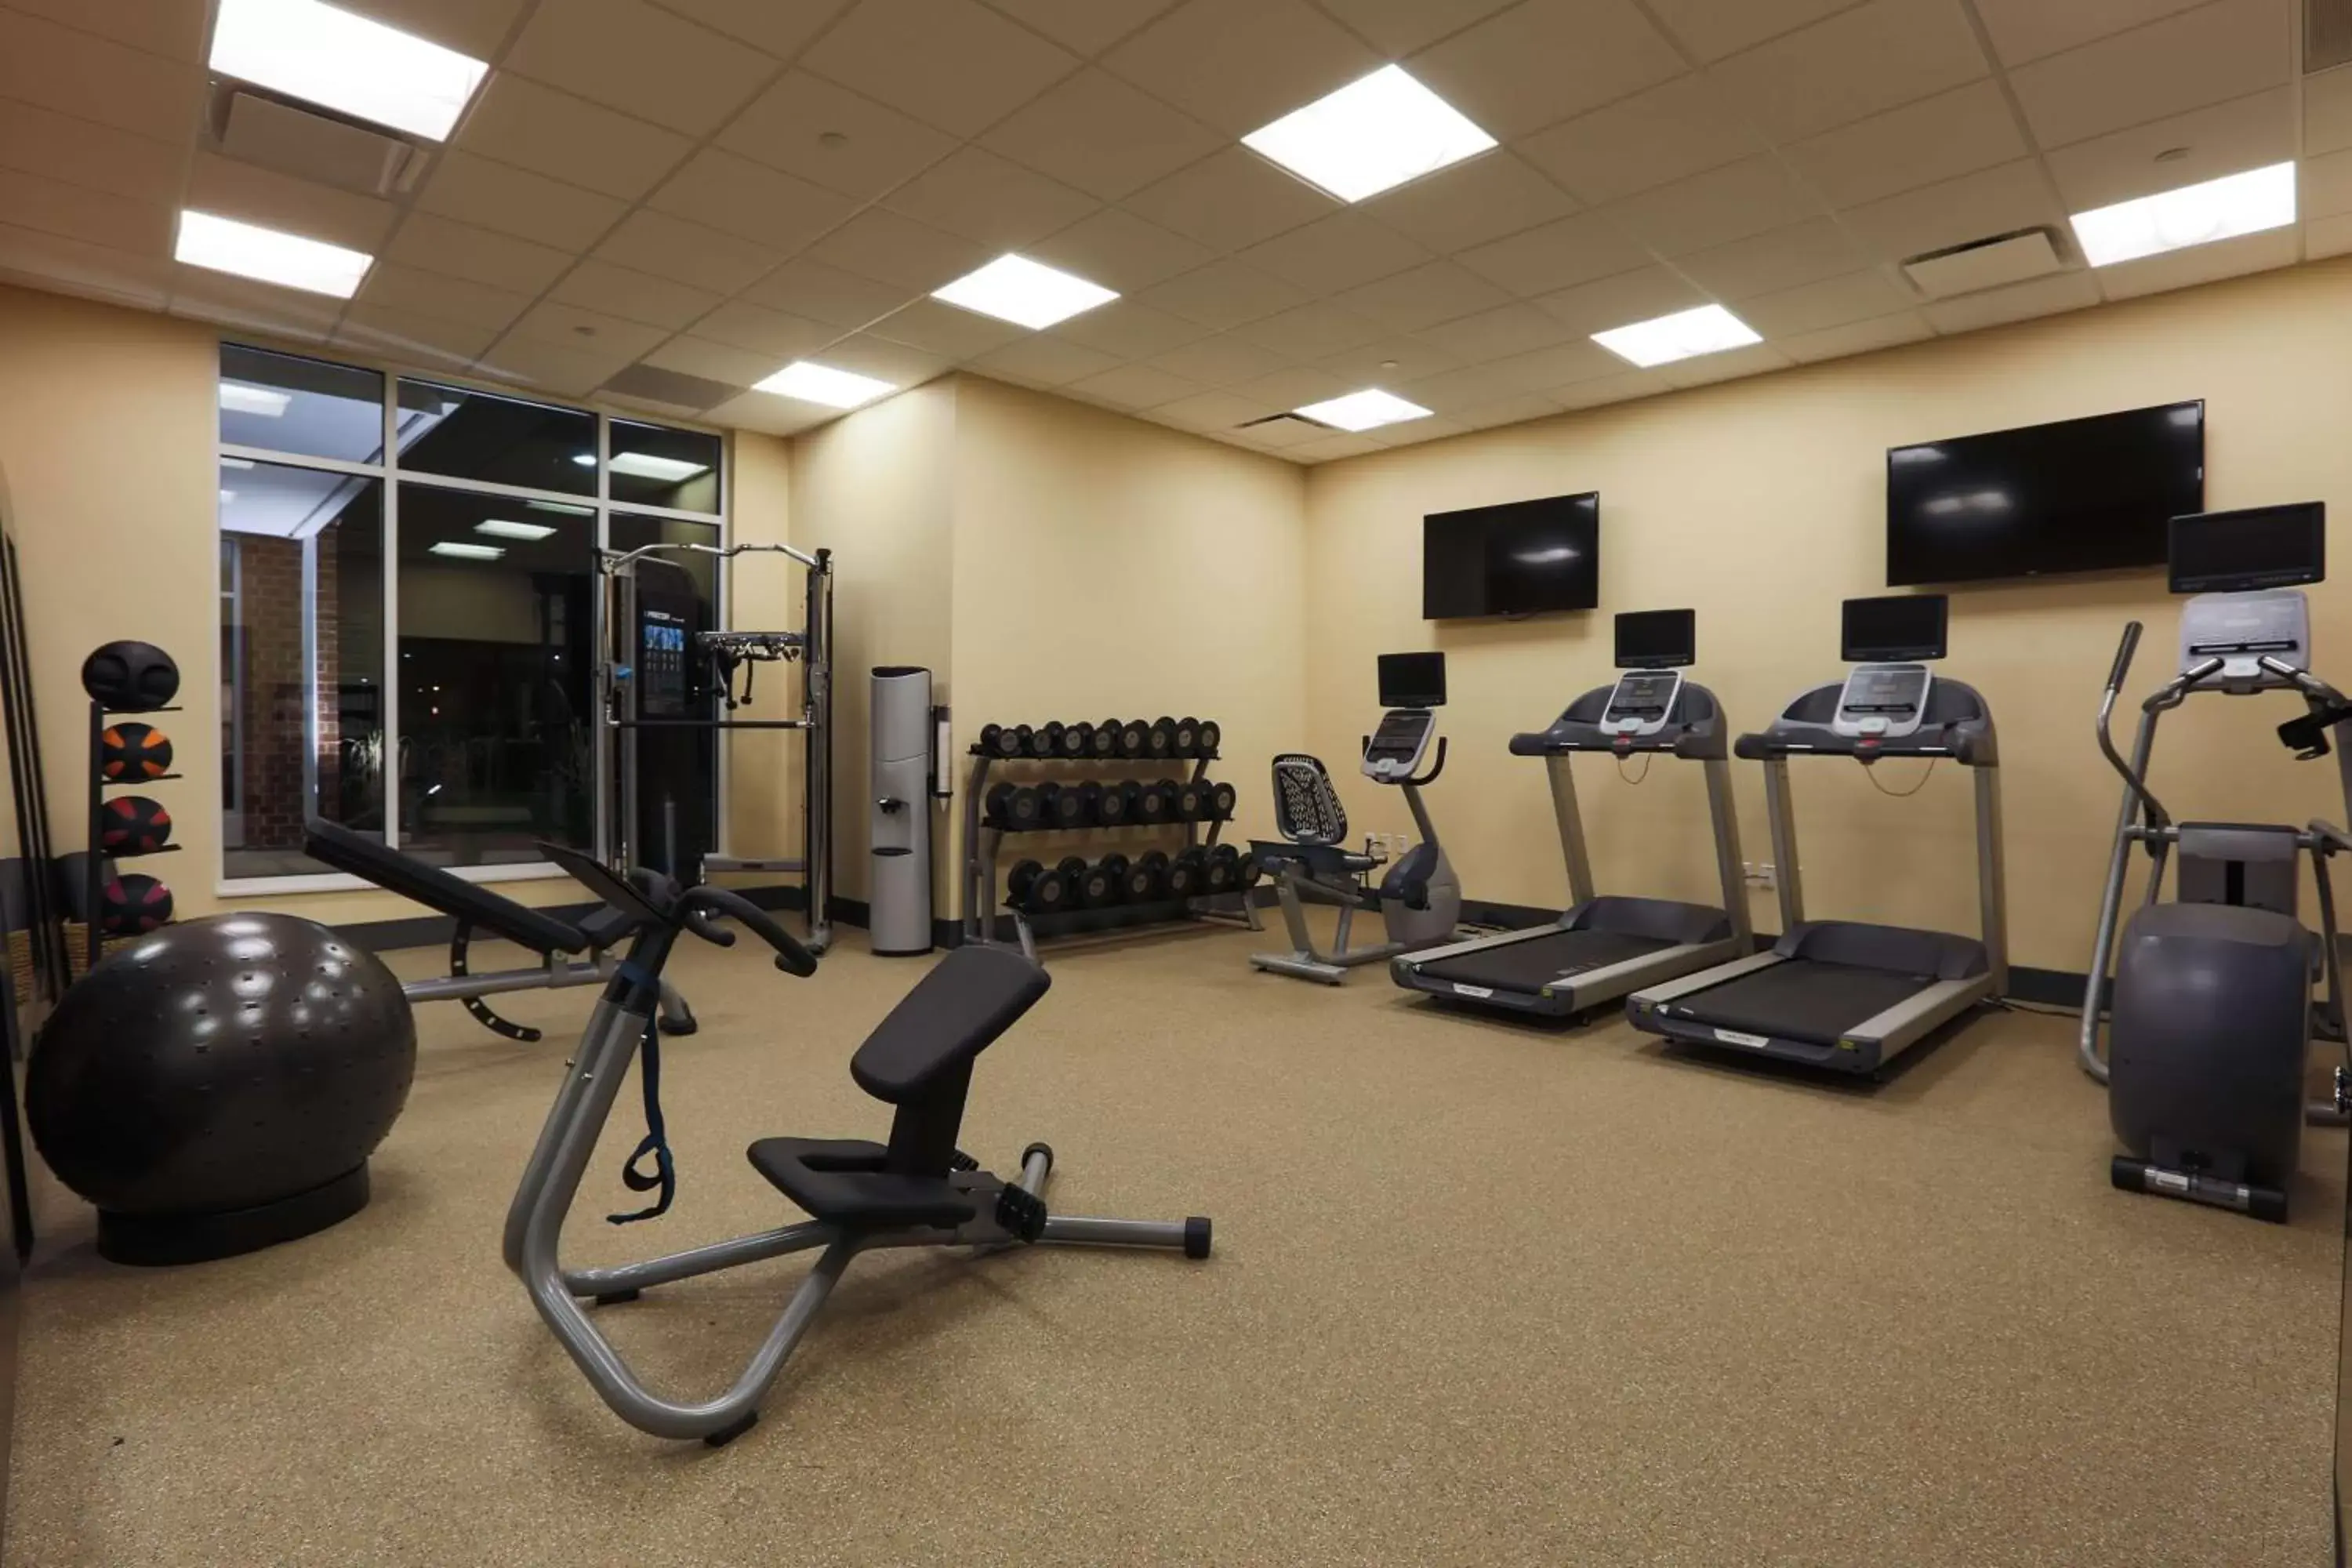 Fitness centre/facilities, Fitness Center/Facilities in Hilton Garden Inn Indiana at IUP